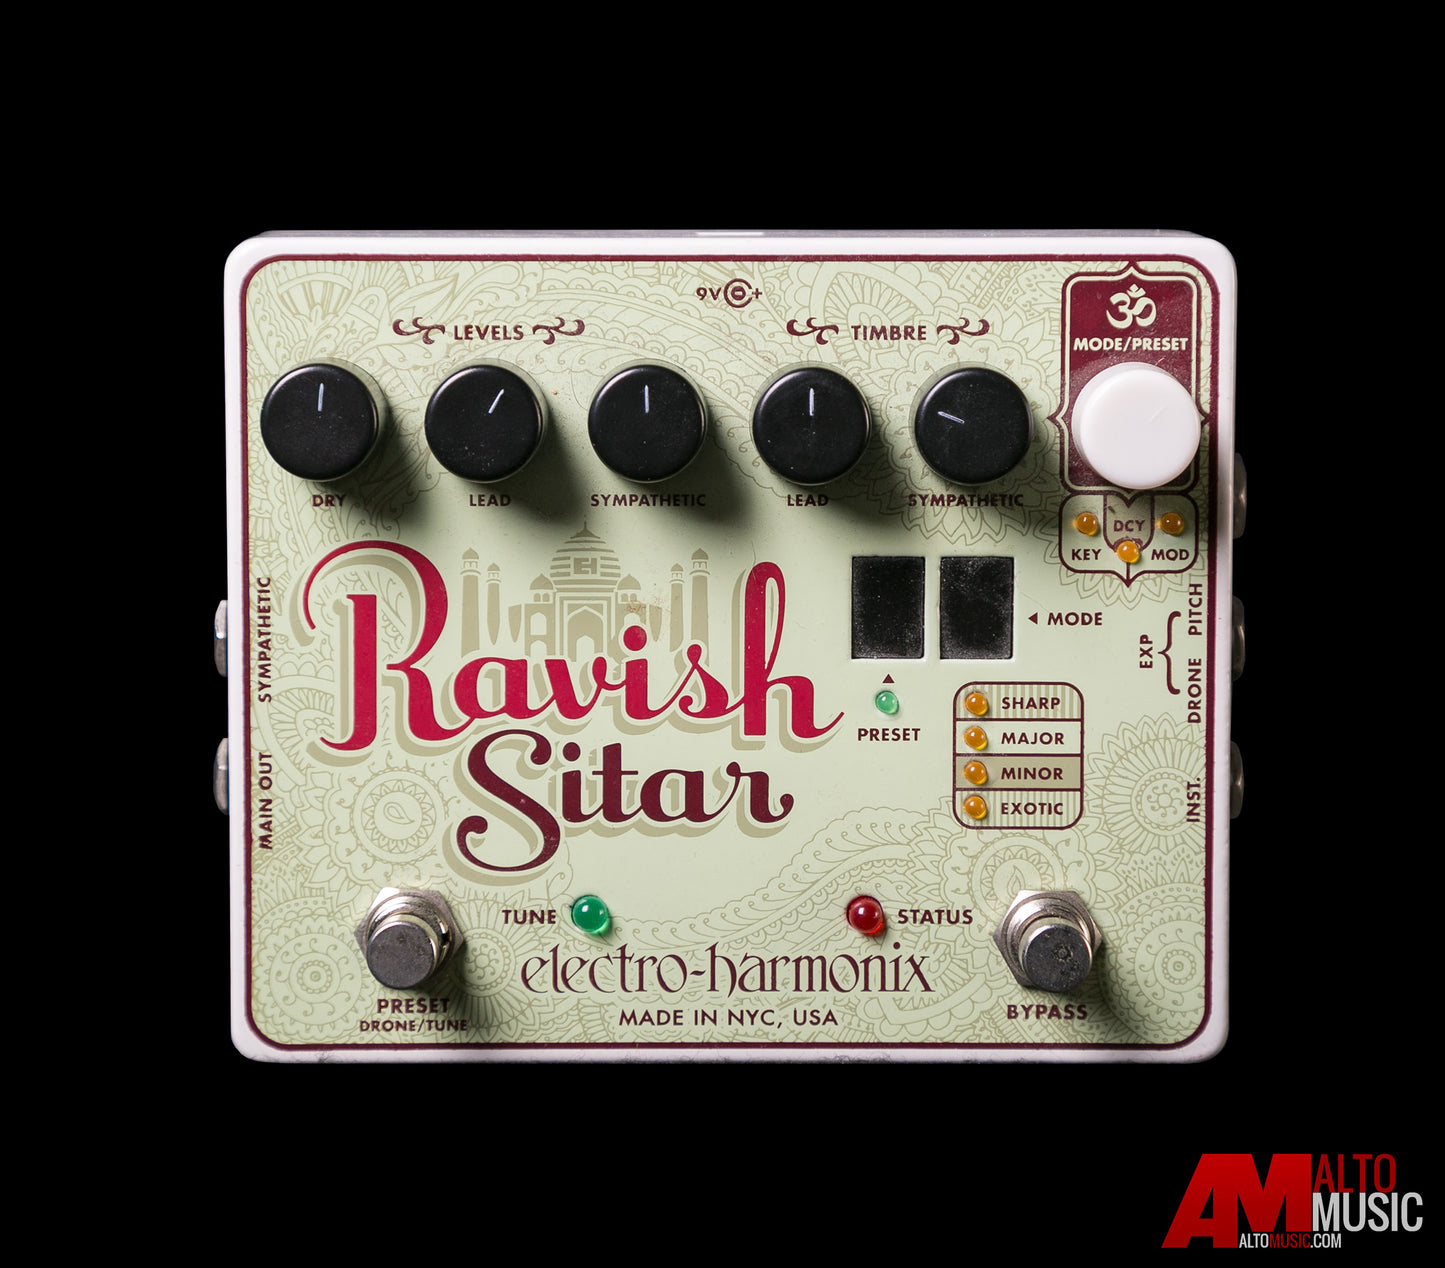 Electro Harmonix Ravish Sitar Guitar Effects Sitar Emulator Pedal